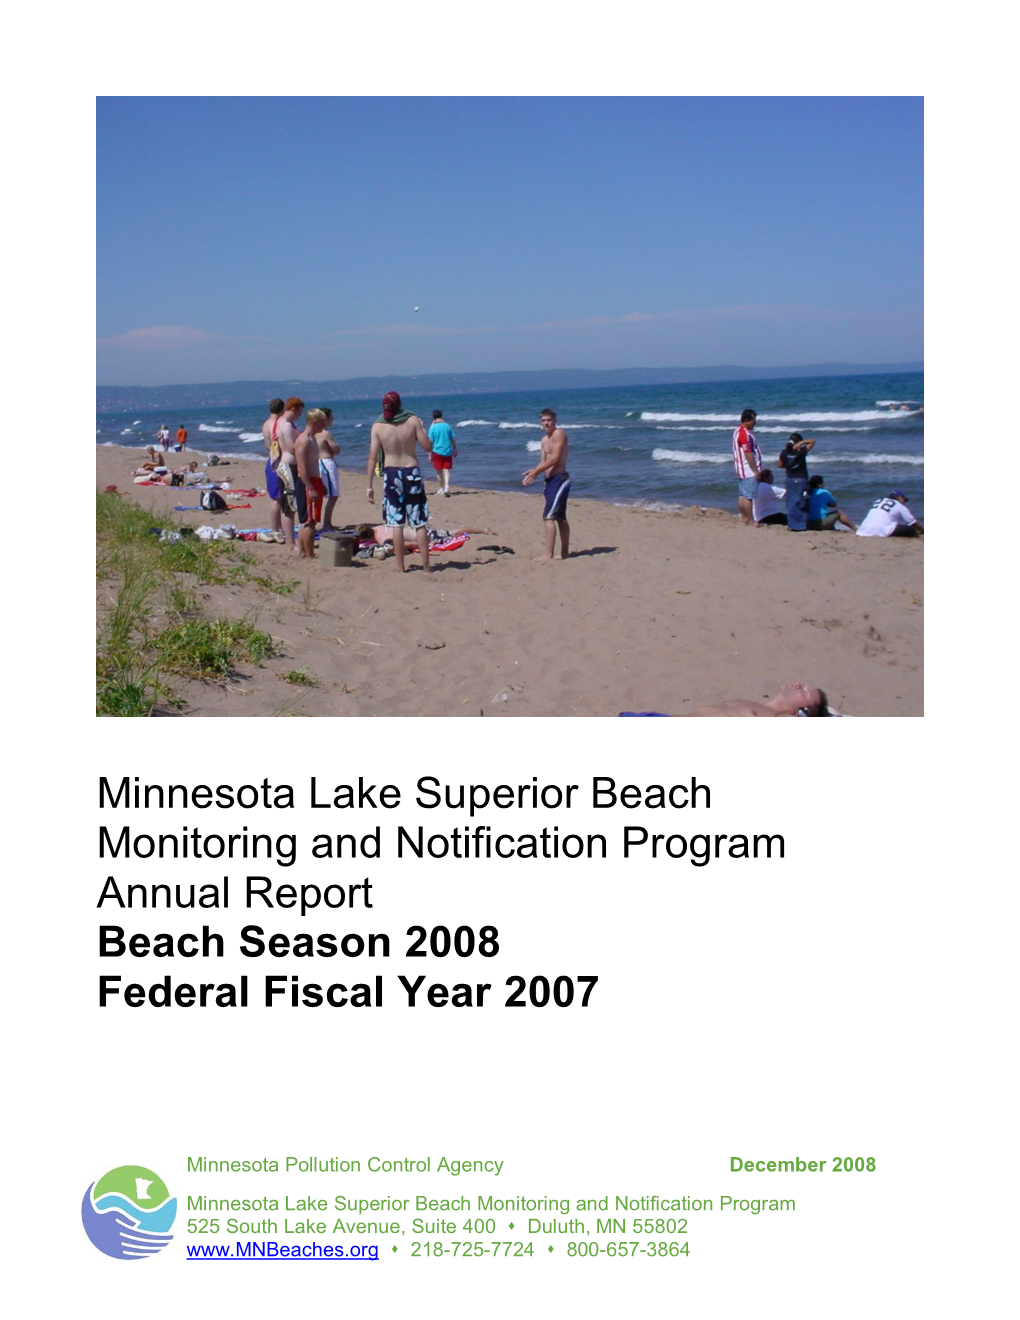 Minnesota Lake Superior Beach Monitoring and Notification Program Annual Report Beach Season 2008 Federal Fiscal Year 2007